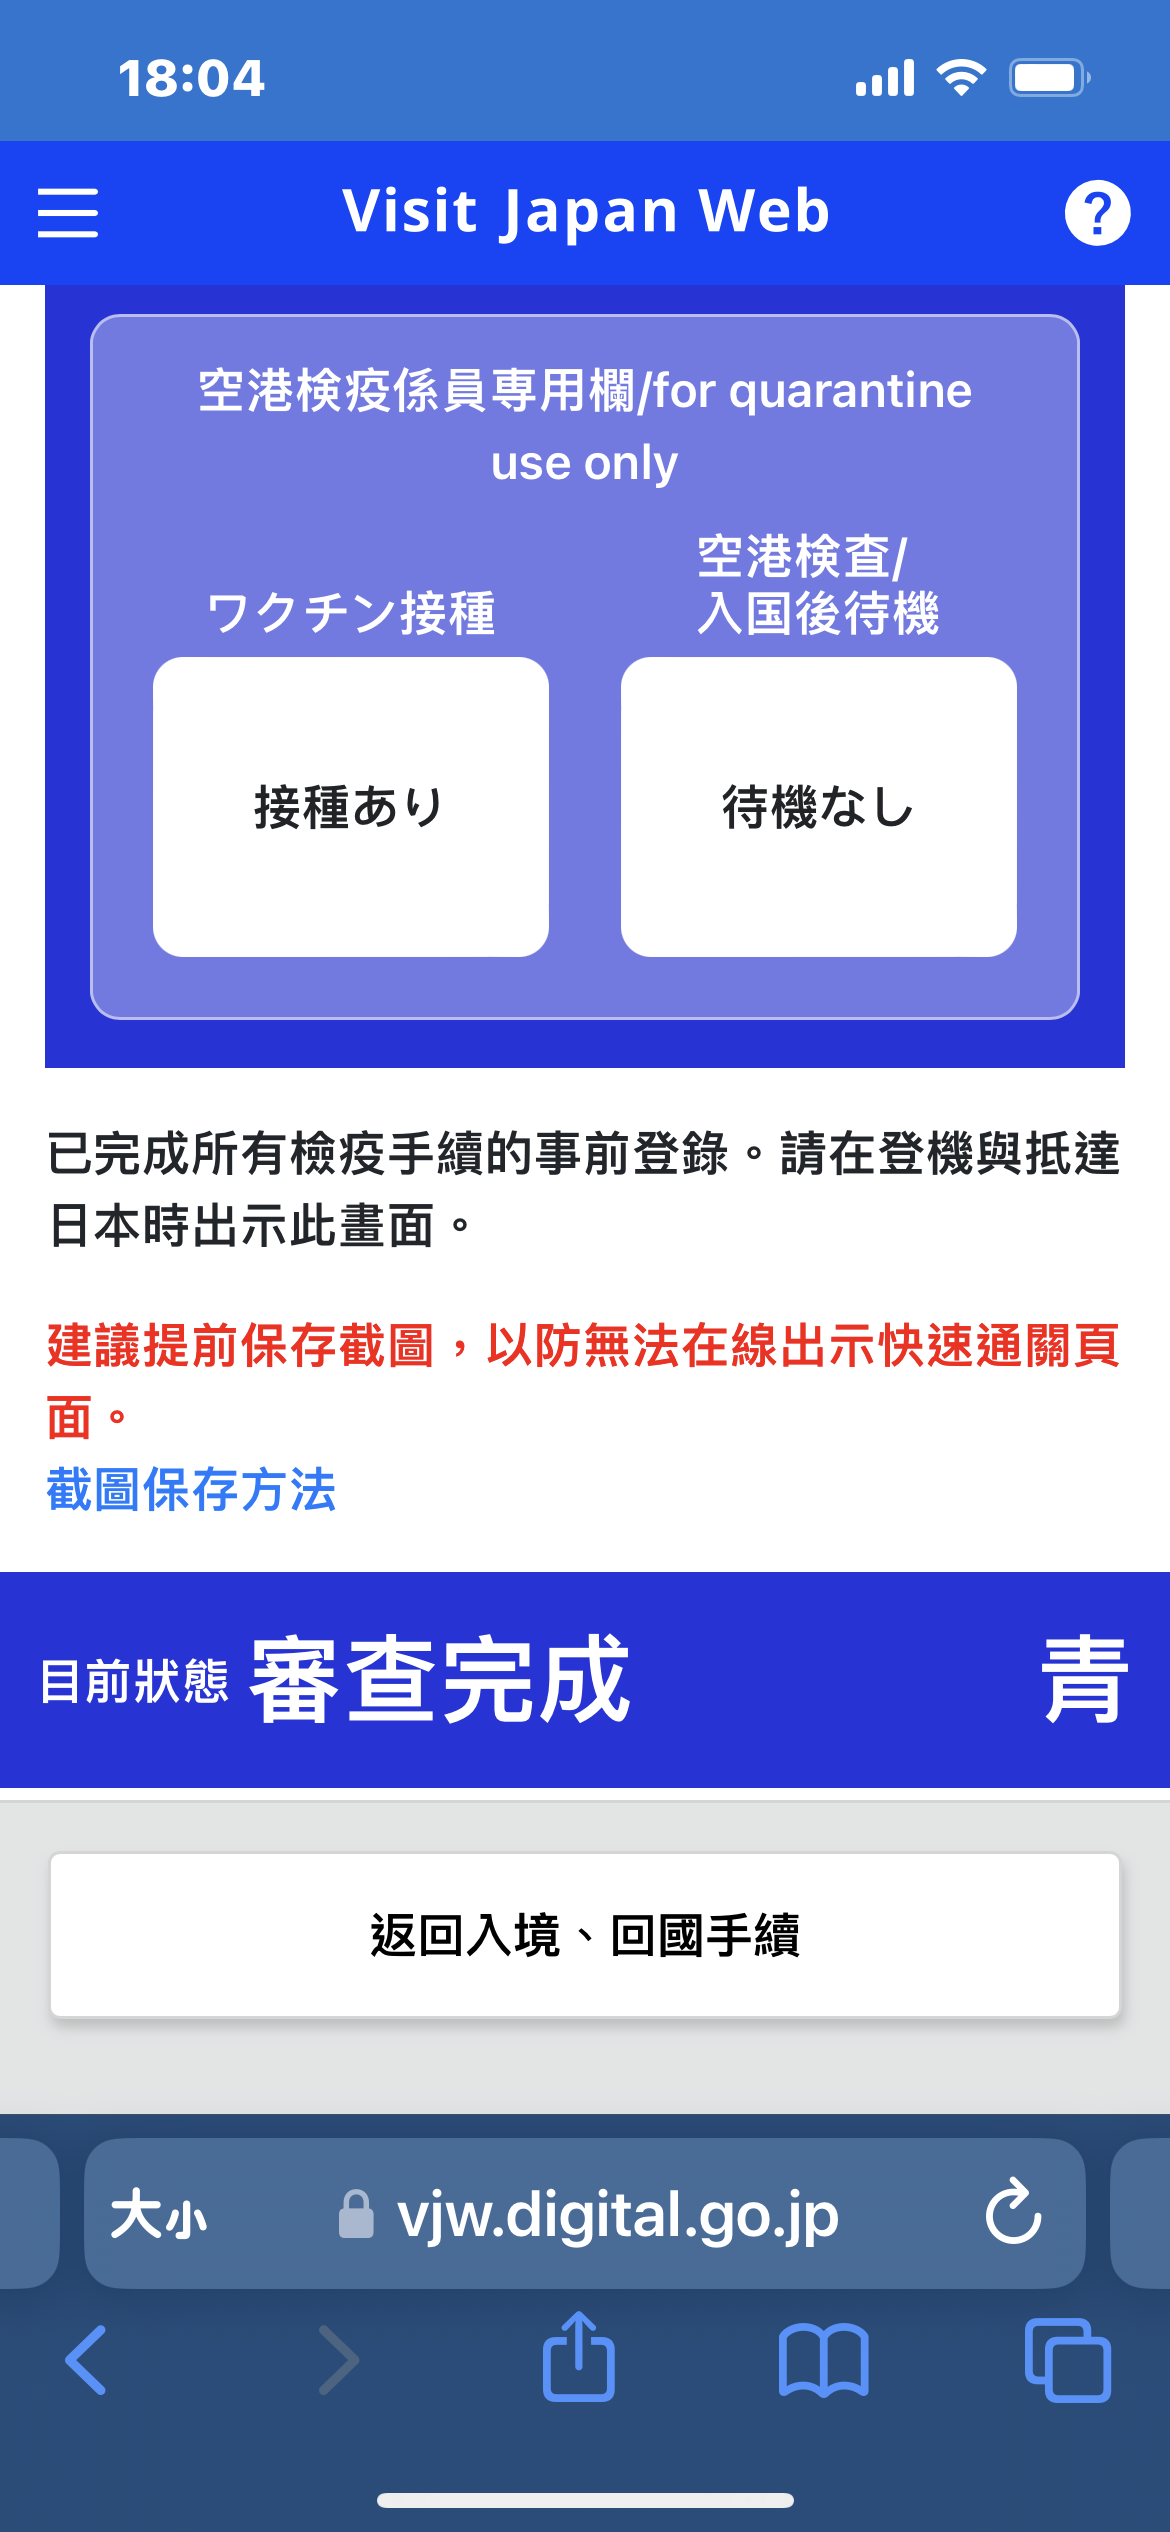 Vistit-japan-web-註冊-教學-審核-申請-入境-日本-填寫-審查-海關